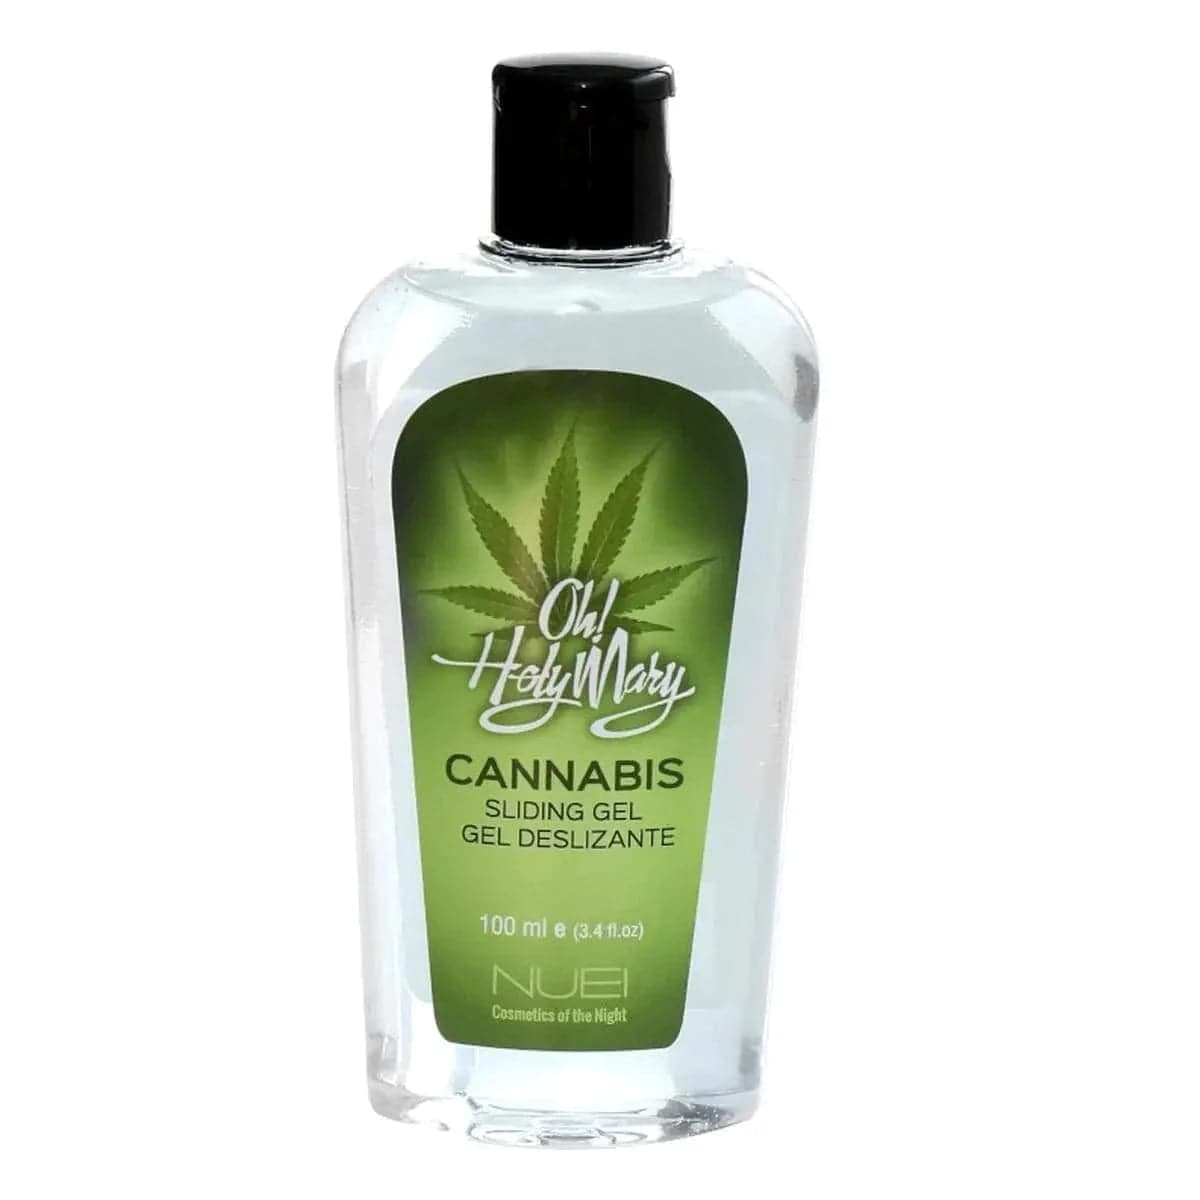 Oh! Holy Mary - Gel Lubrificante Deslizante Cannabis Nuei 100ml - Pérola SexShop